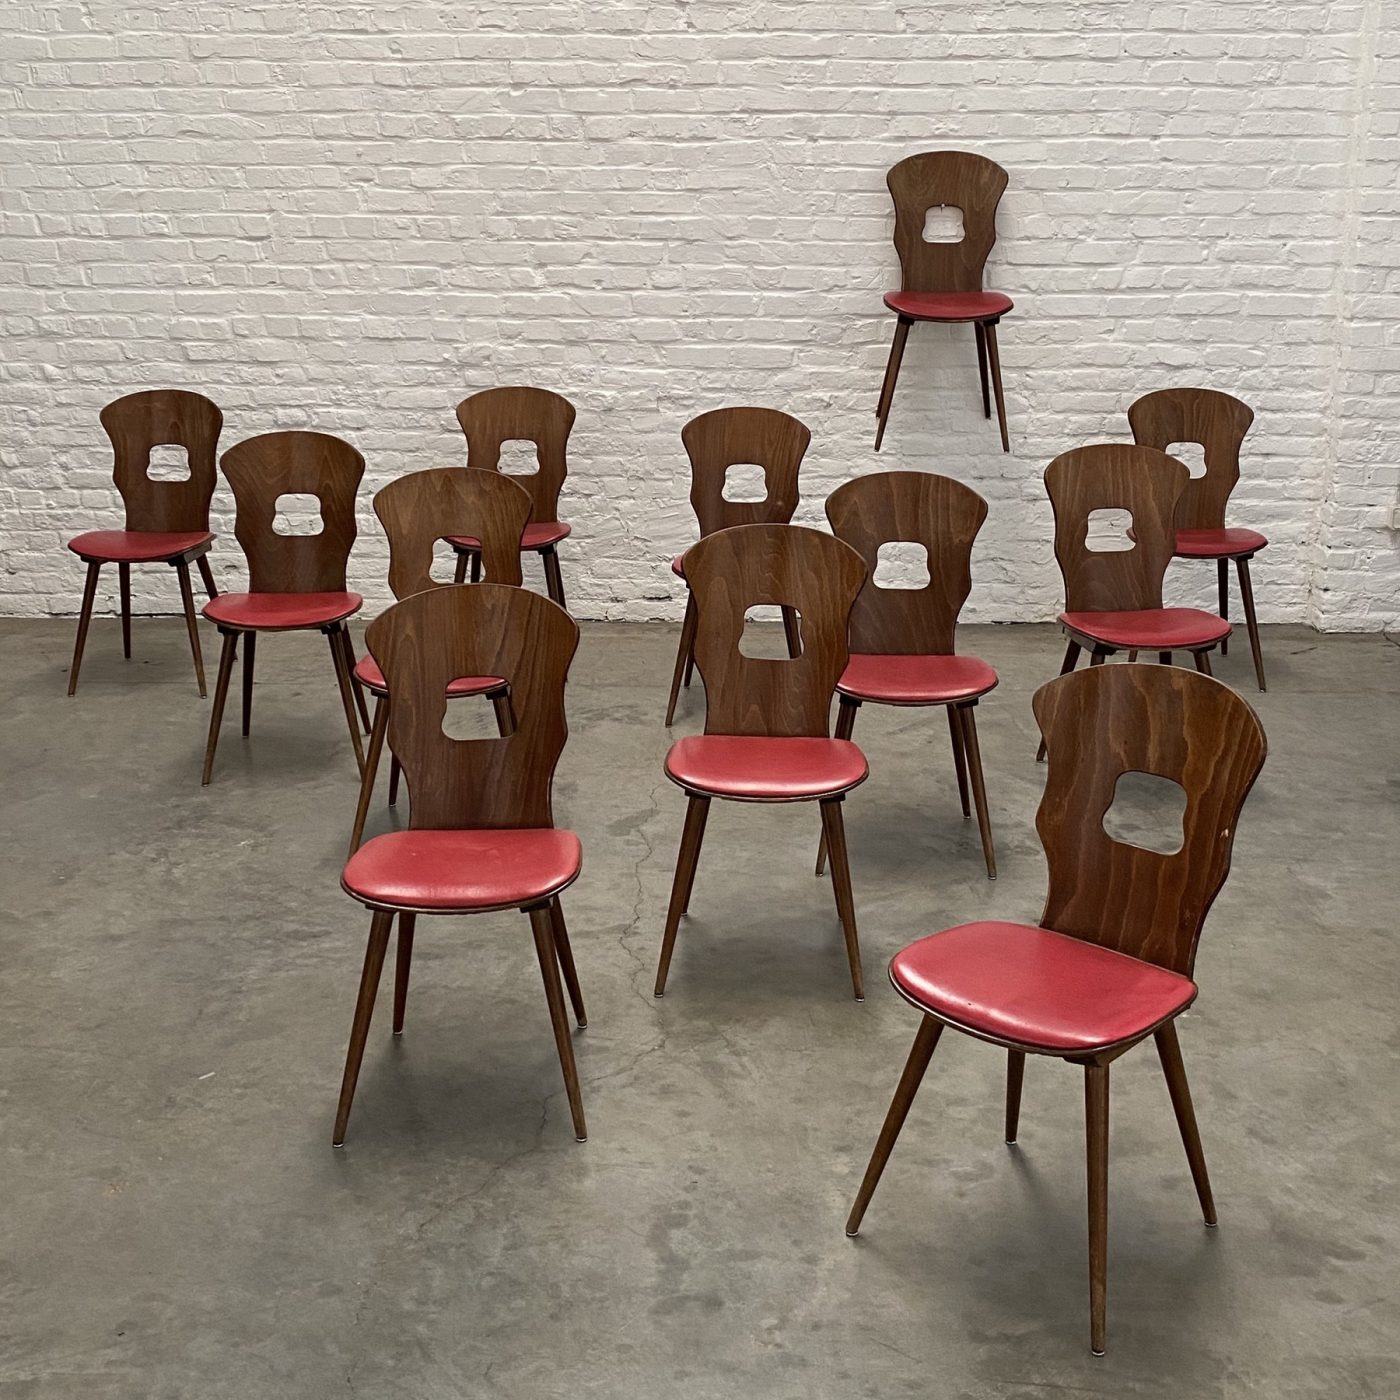 objet-vagabond-baumann-chairs0005